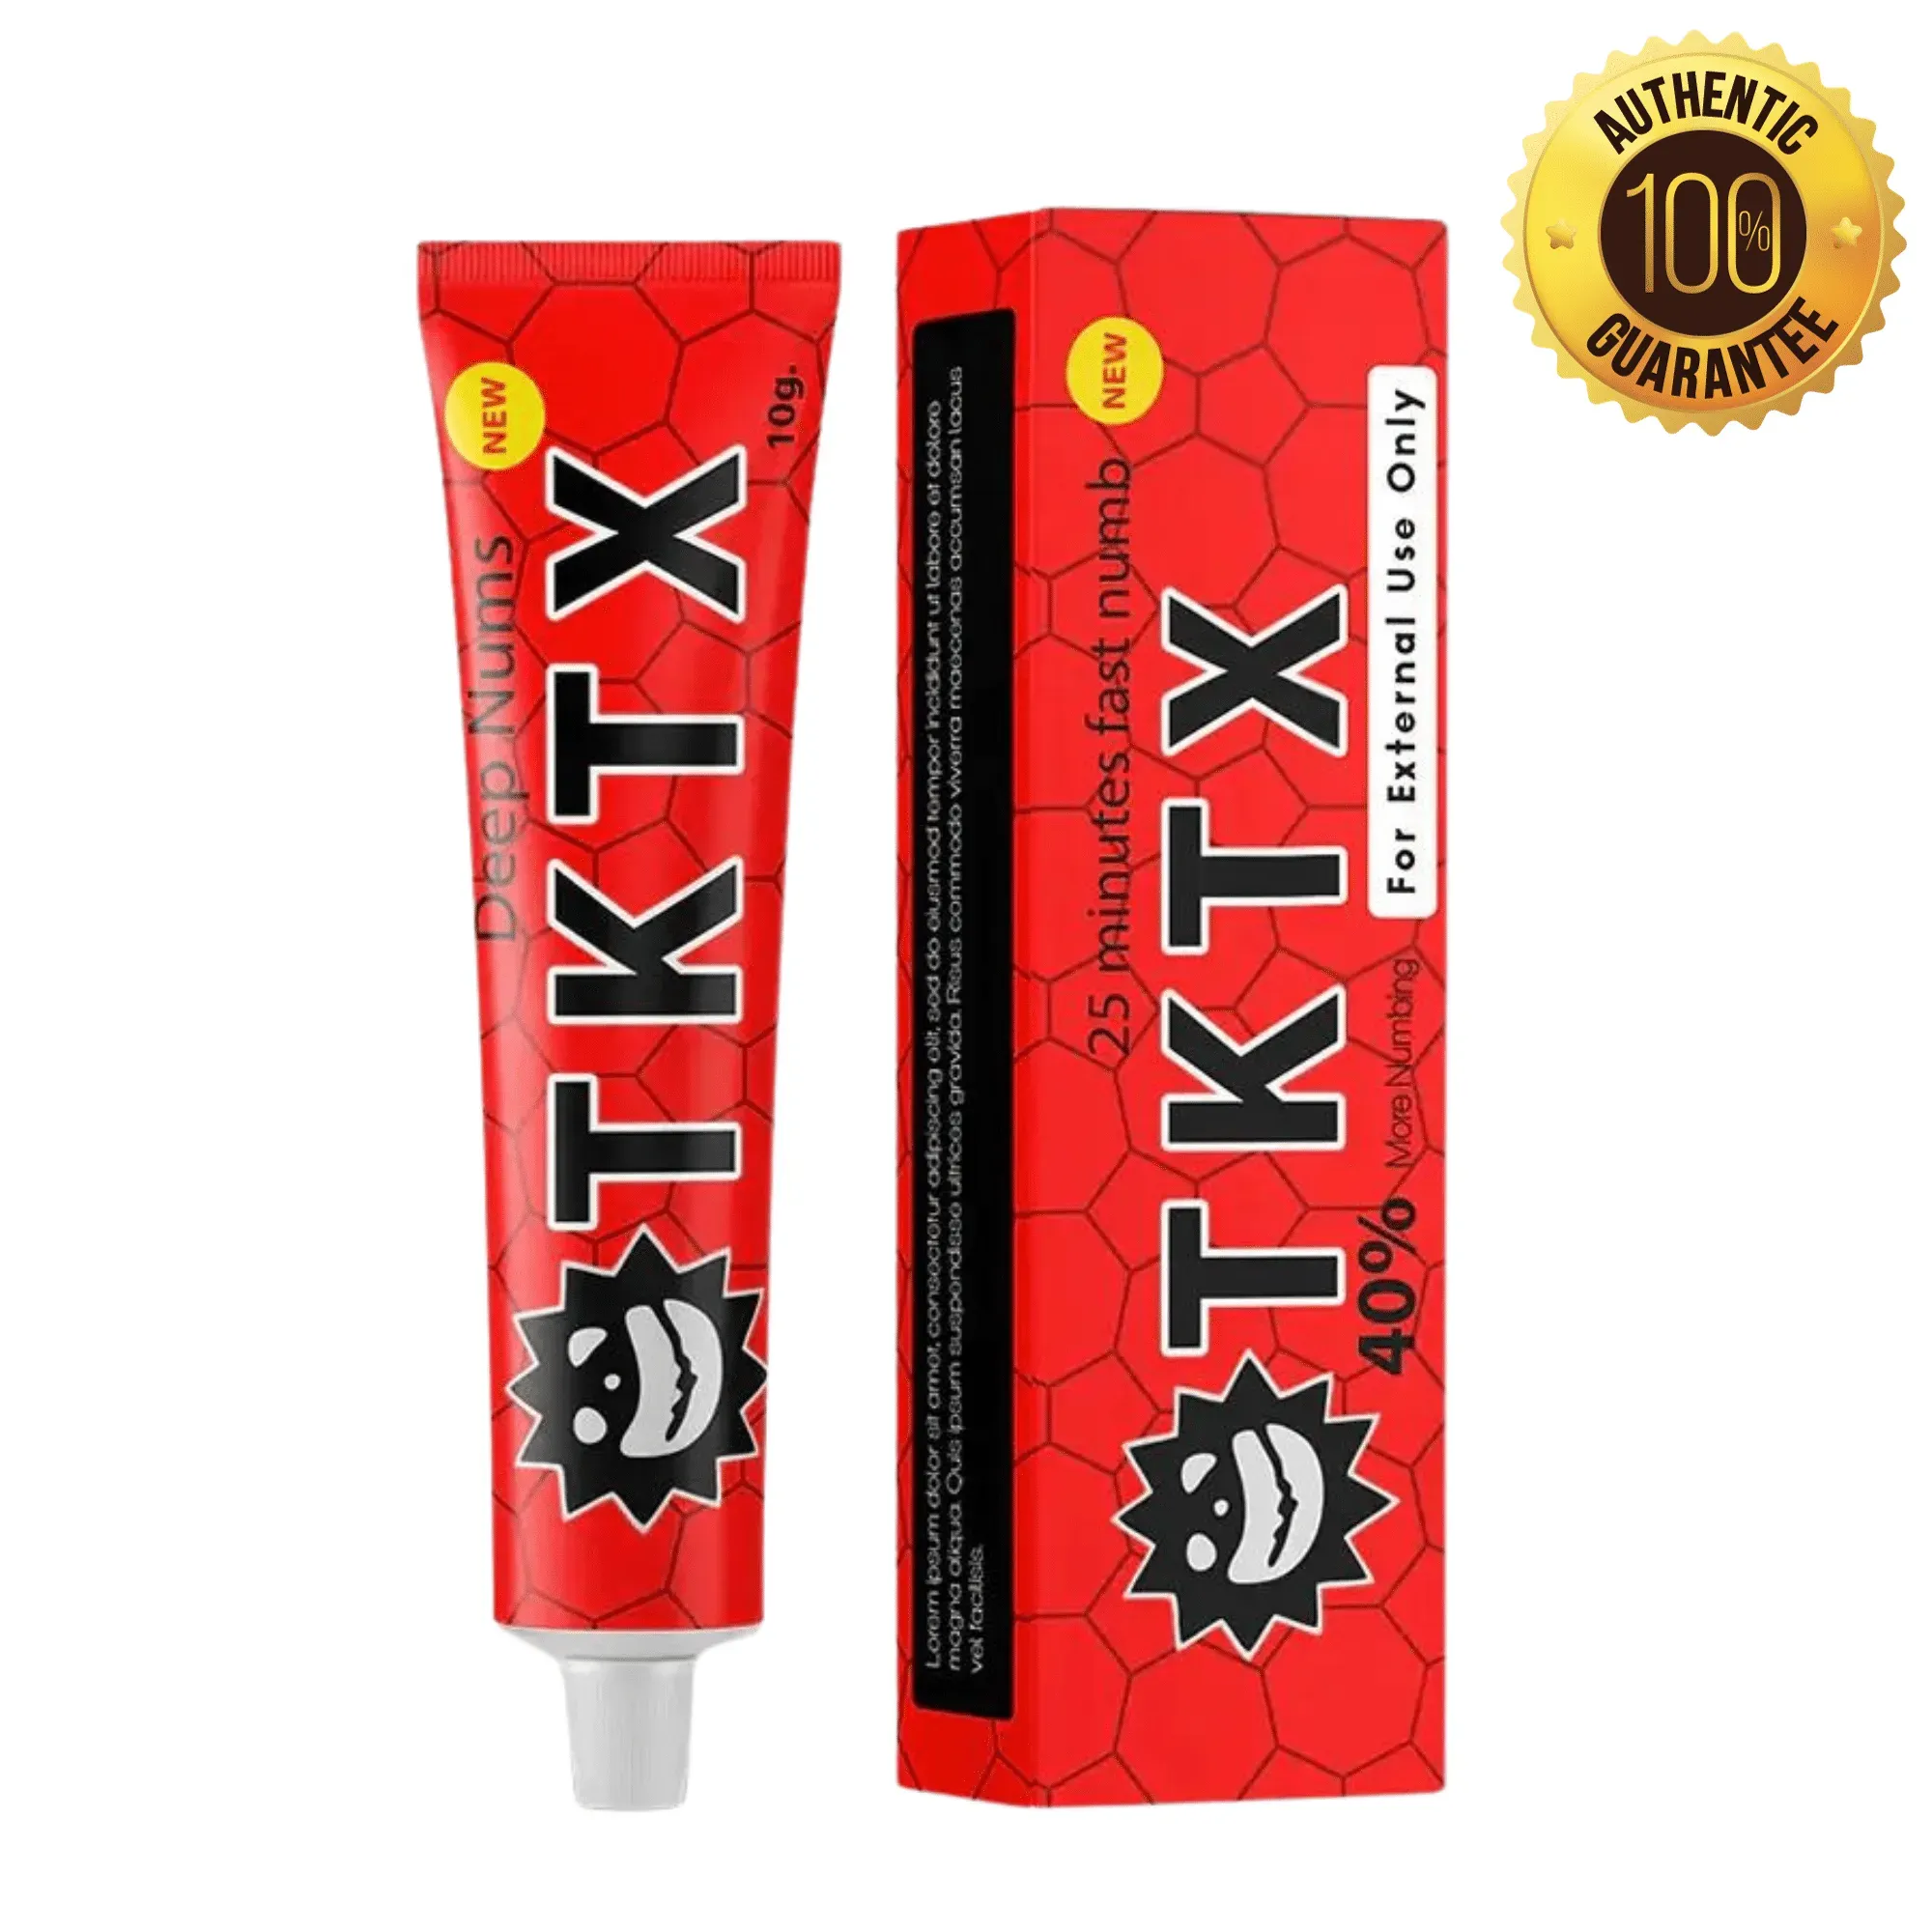 Red TKTX Numbing Cream 10g